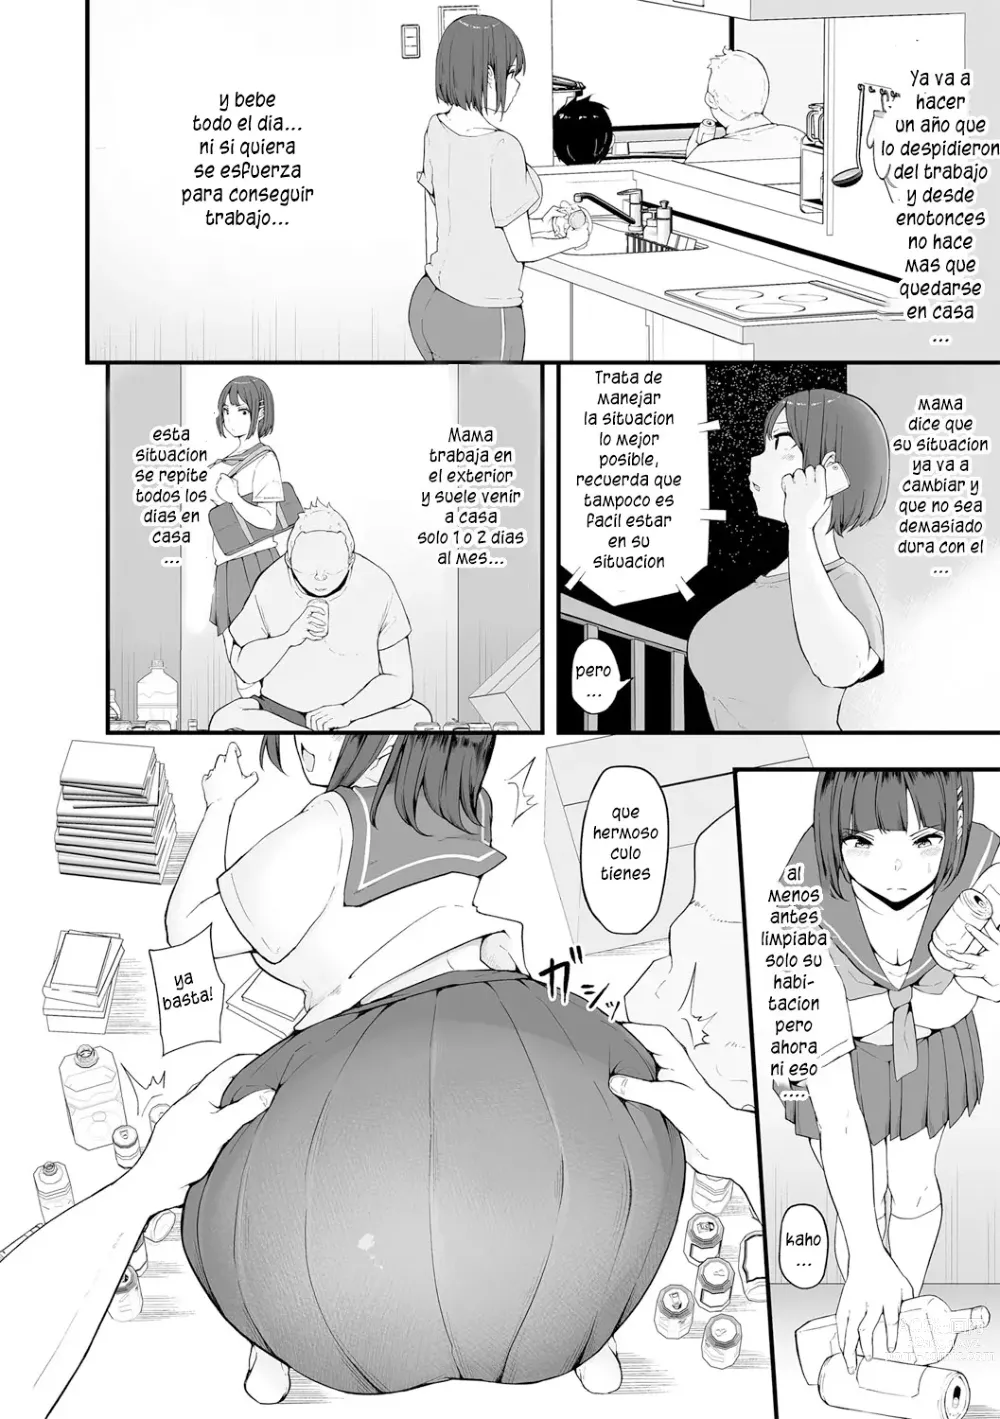 Page 5 of manga Honou ni wa Katenakatta 1 - No pude vencer a mi instinto 1